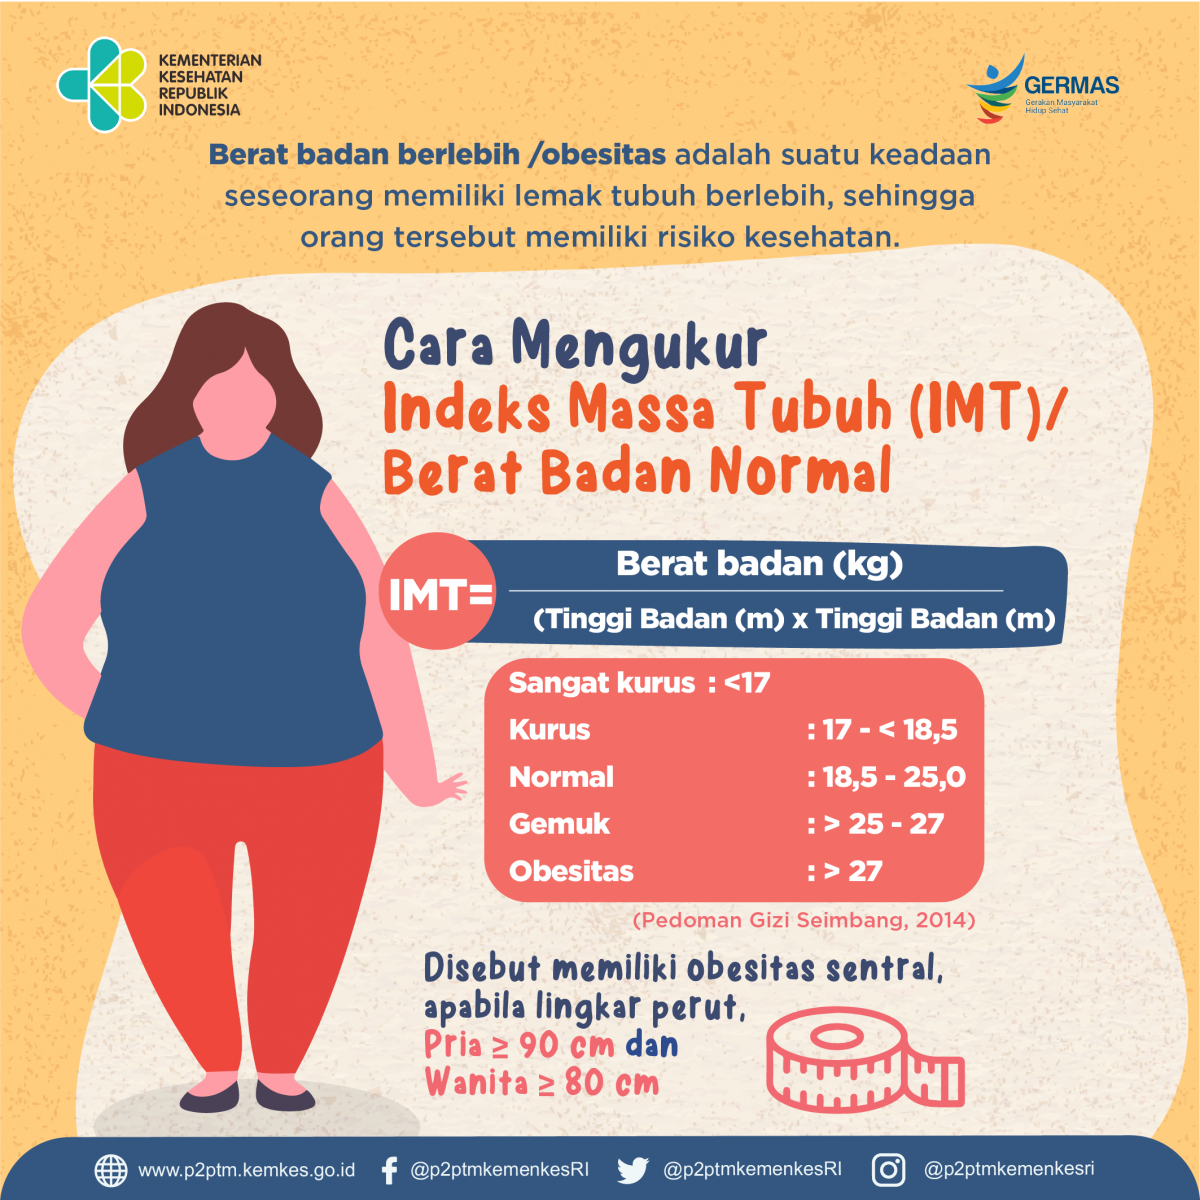 Bagaimana Cara Mengukur Indeks Massa Tubuh (IMT) / Berat Badan Normal?